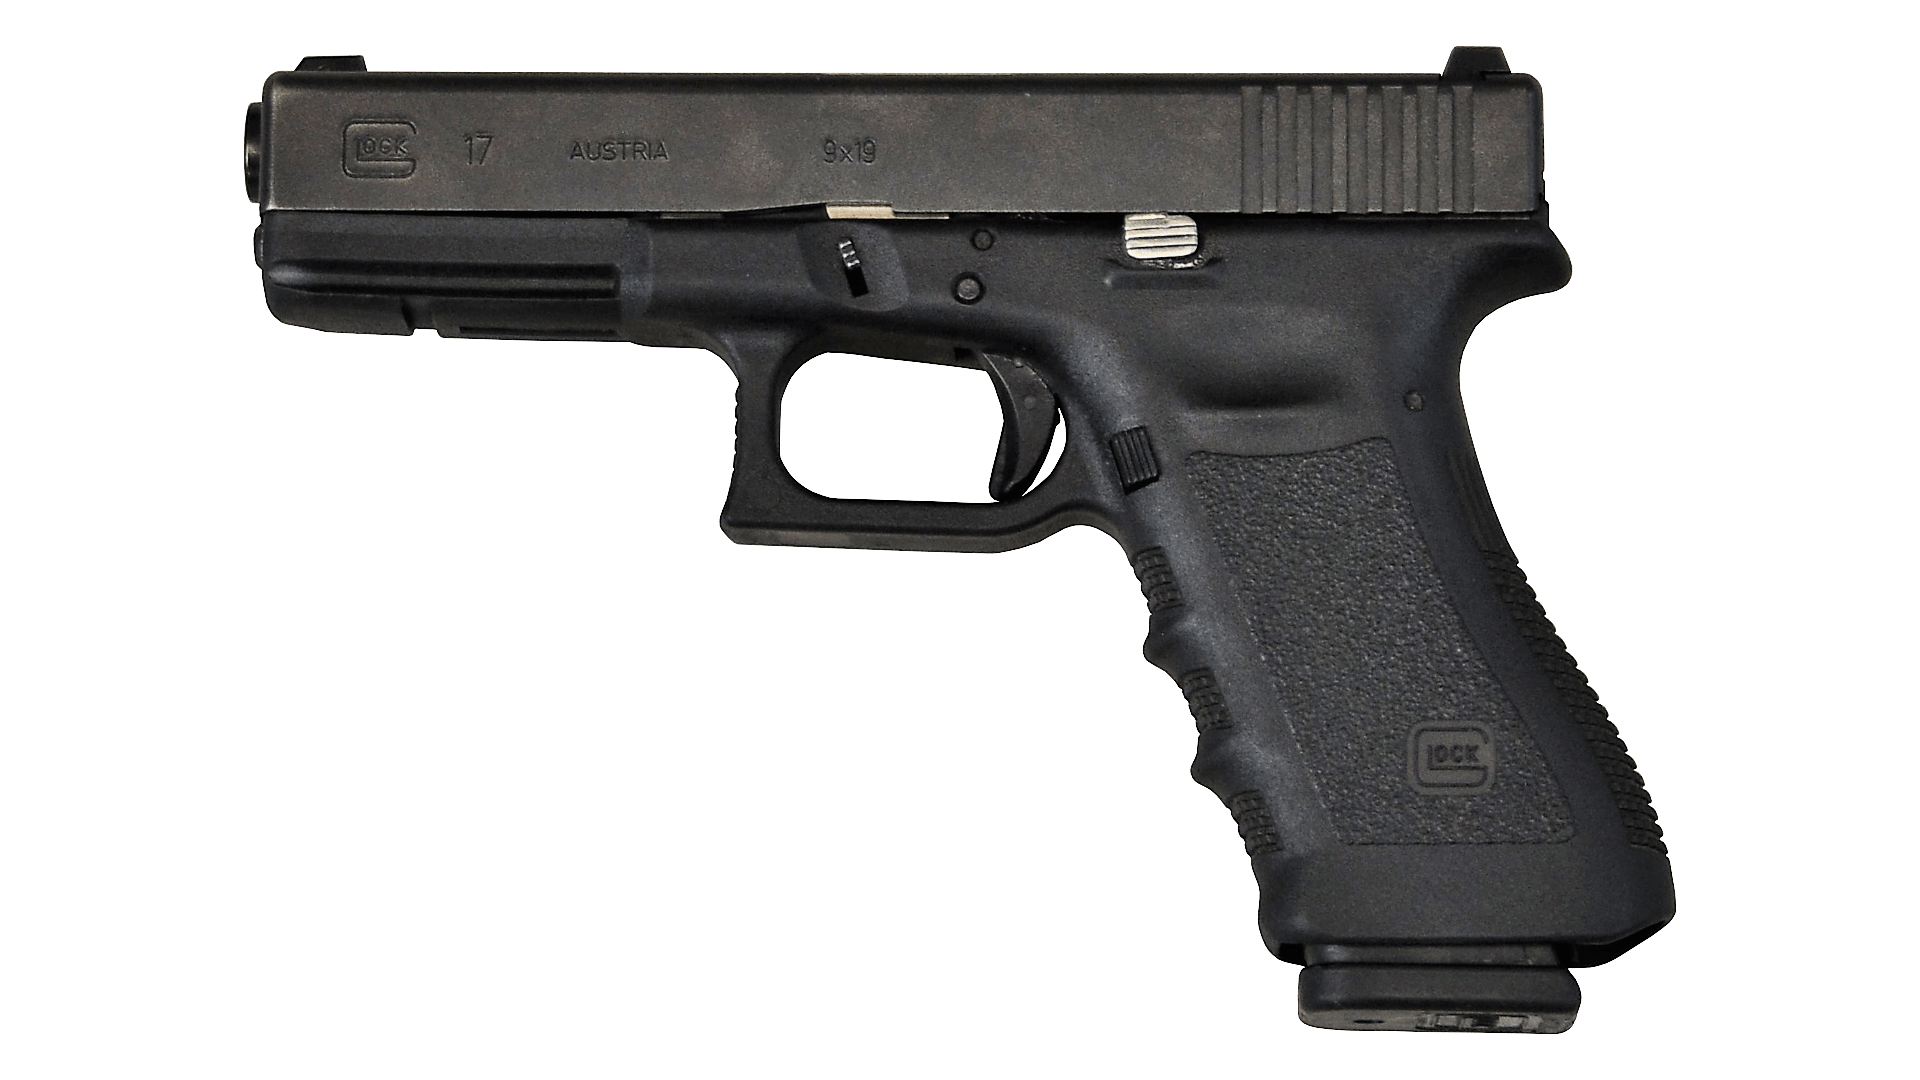 Glock 17 pistolet centralnego zapłonu kaliber 9x19 mm